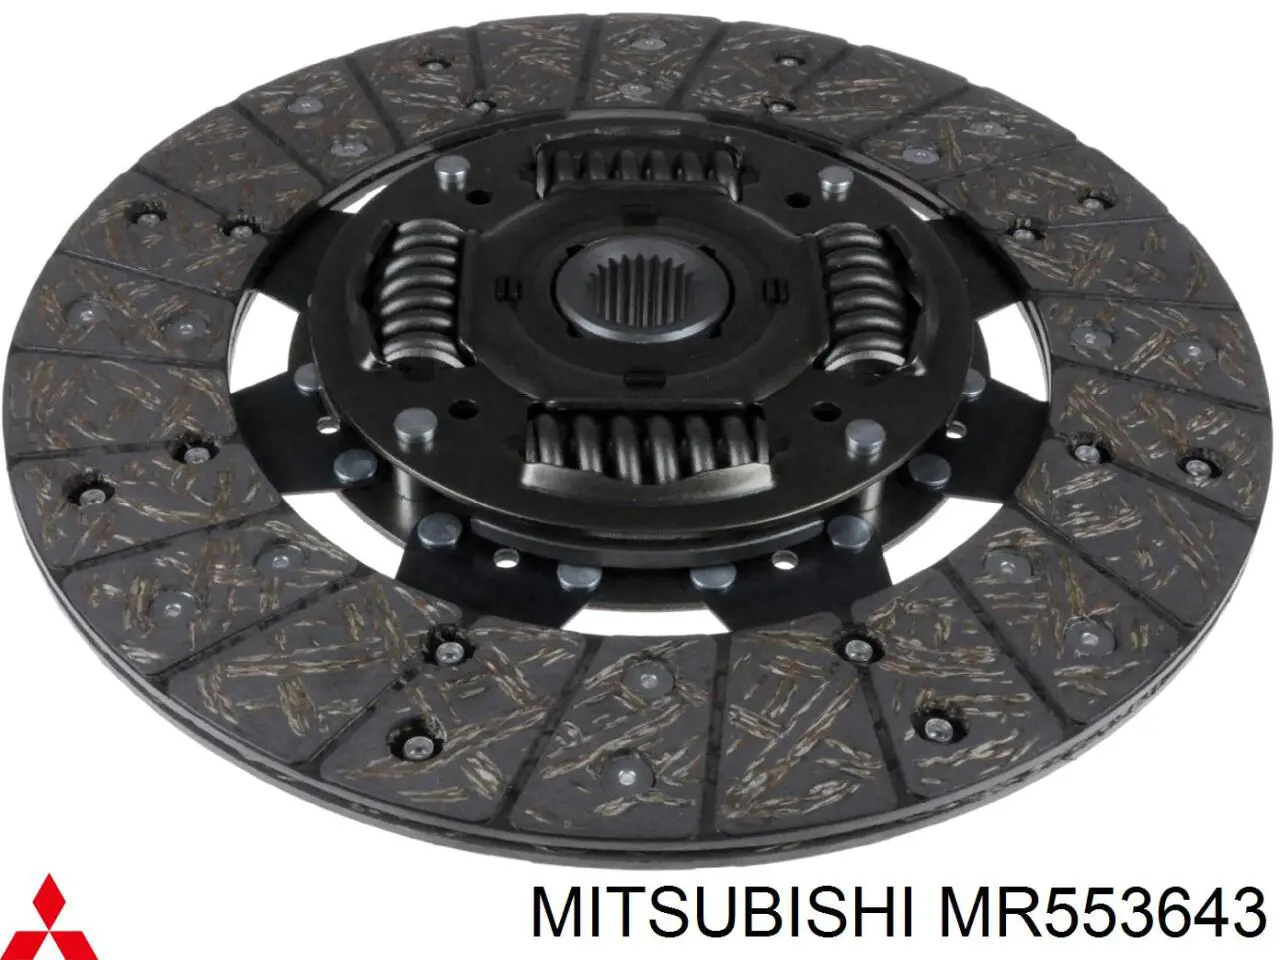 MR553643 Mitsubishi disco de embrague